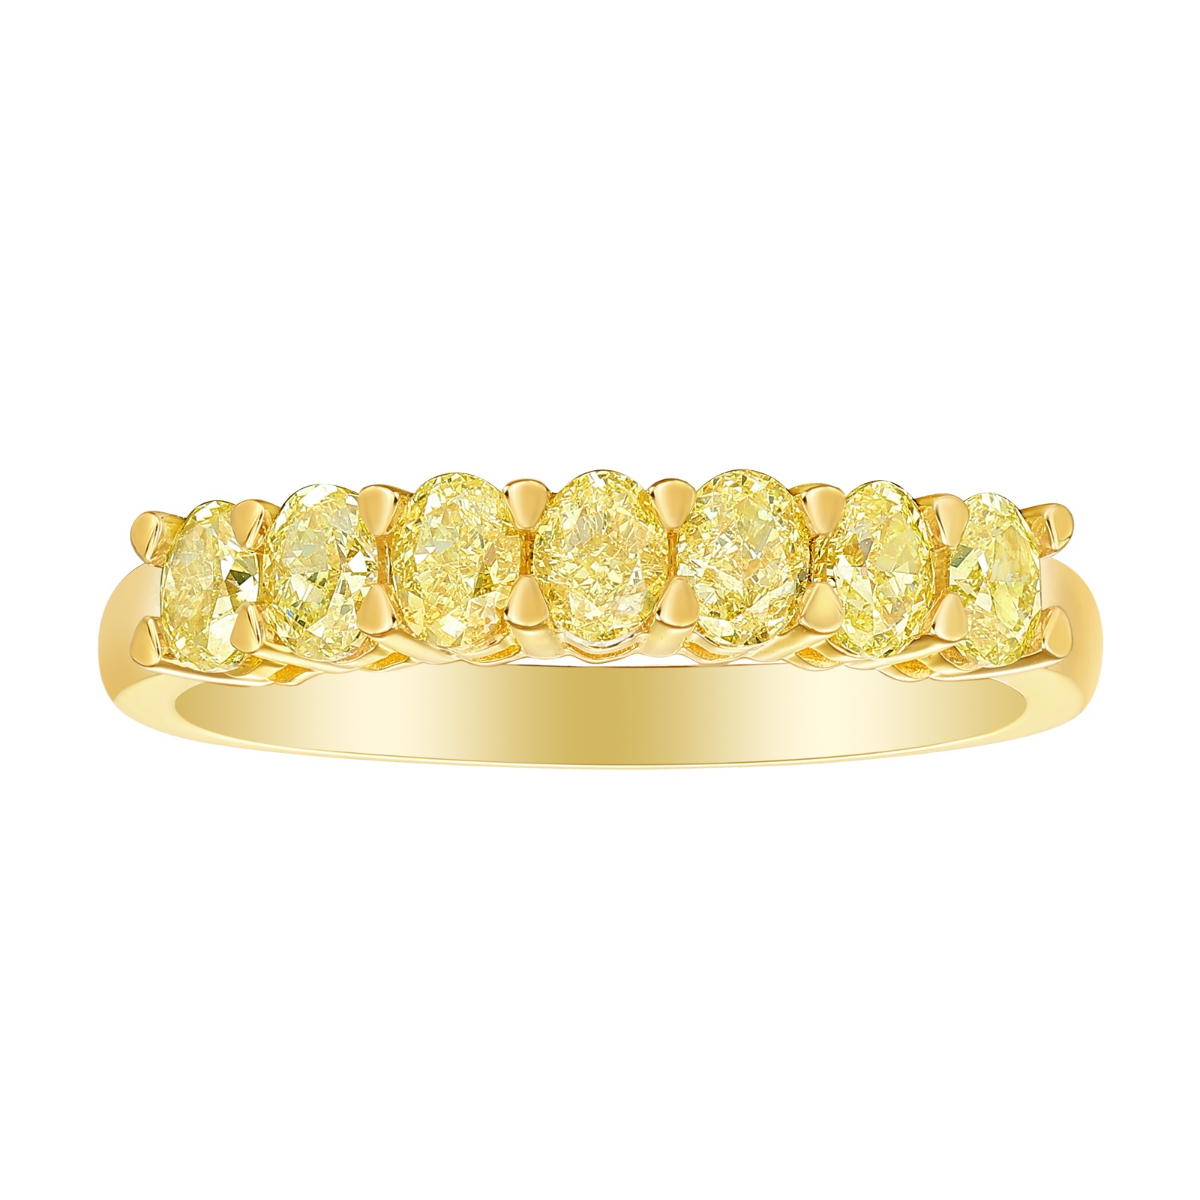 R37128NYL – 18K Yellow Gold Diamond Ring, 1.12 TCW